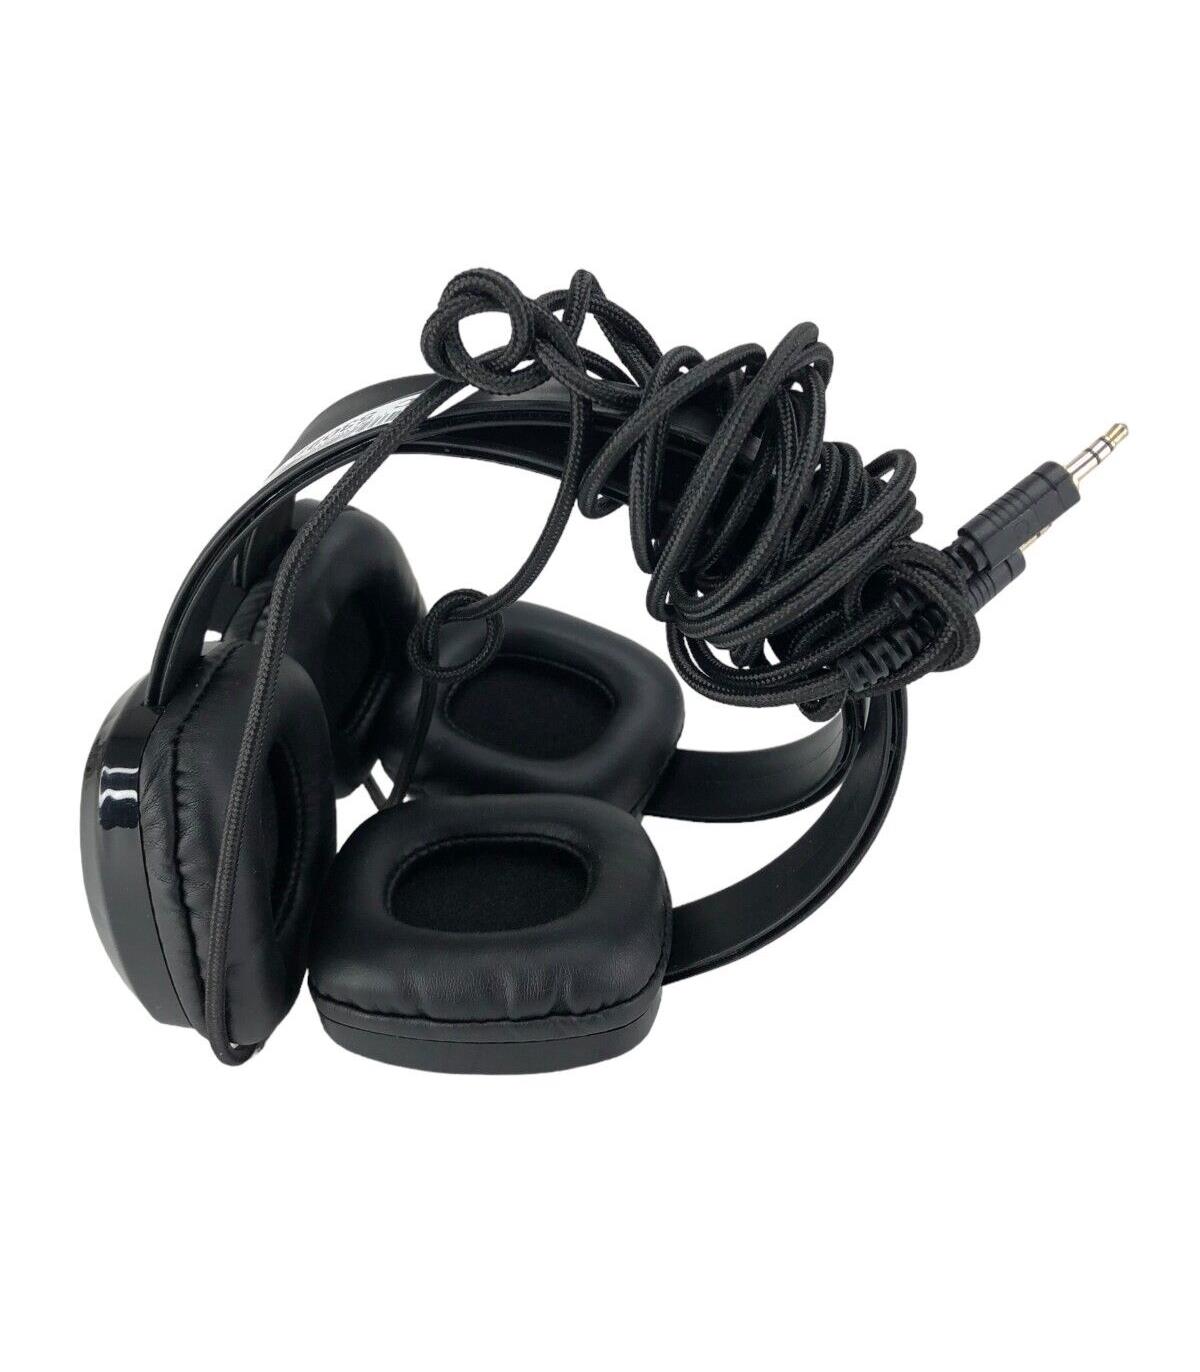 Lot of 2 NOB Cyber Acoustics ACM-6004 Stereo Headphones Black New